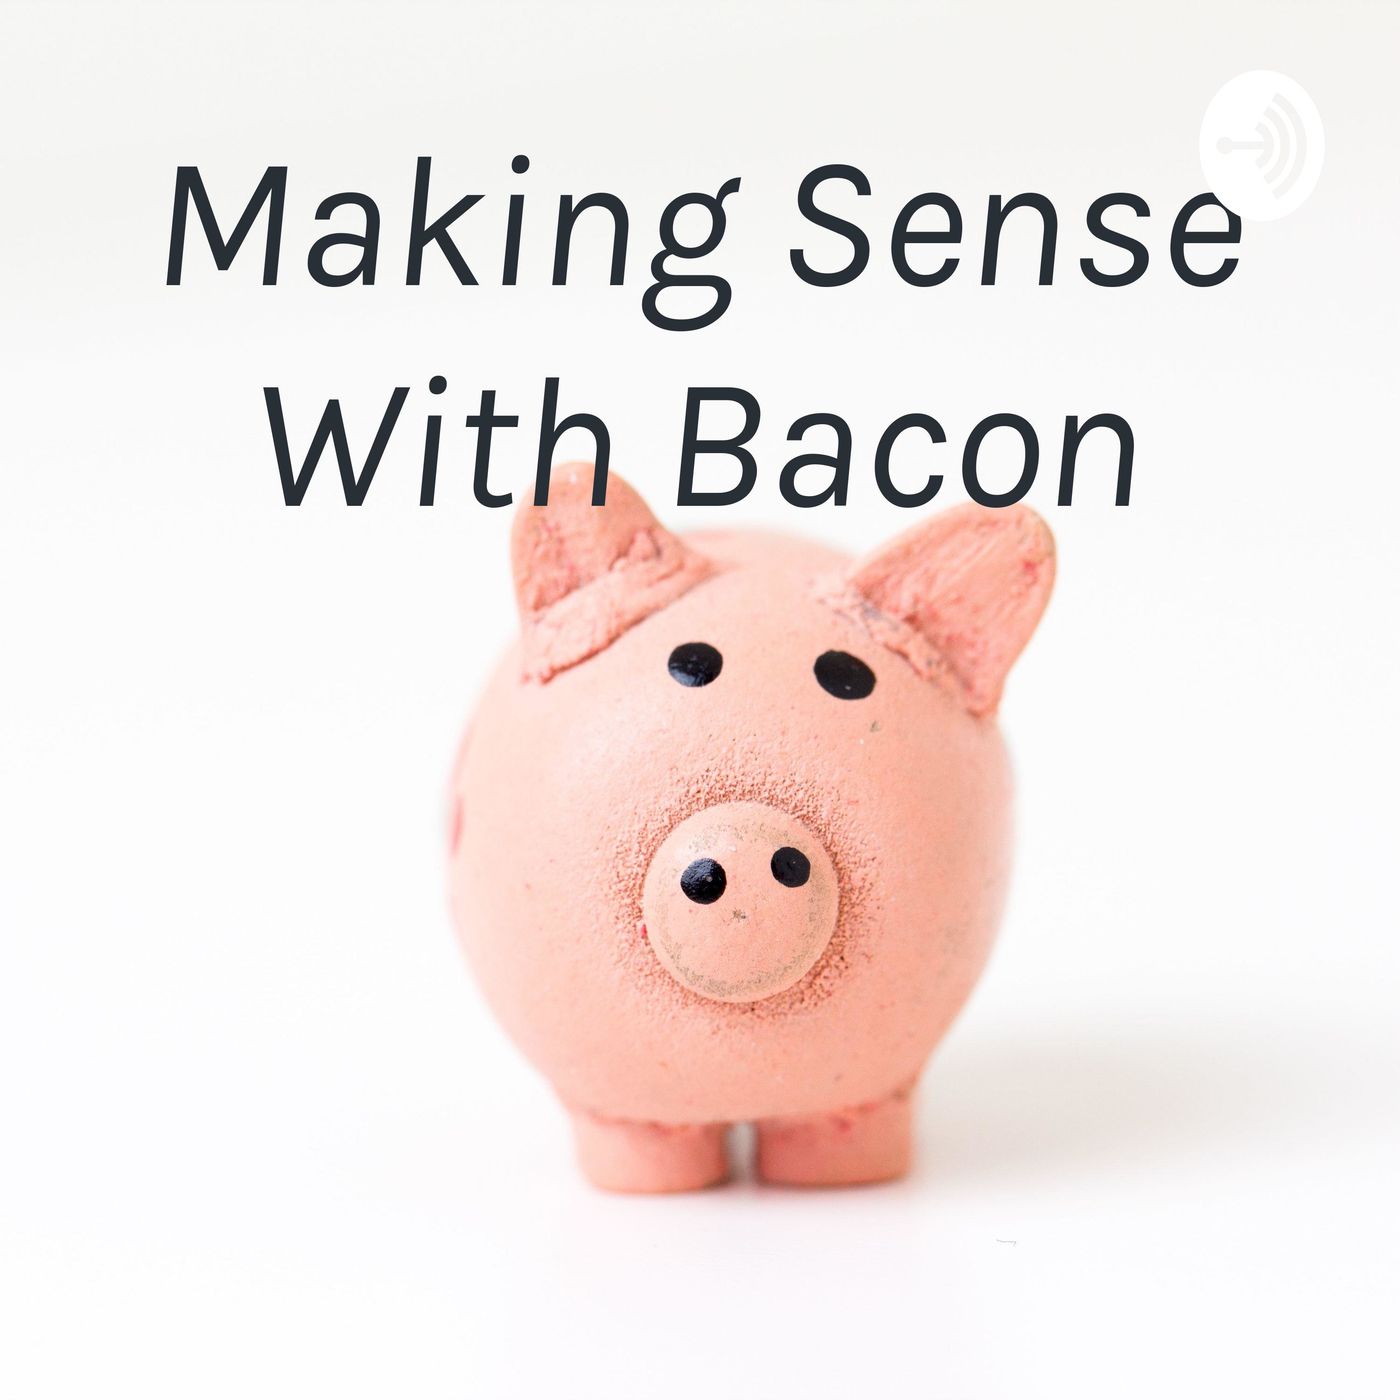 Making Sense With Bacon